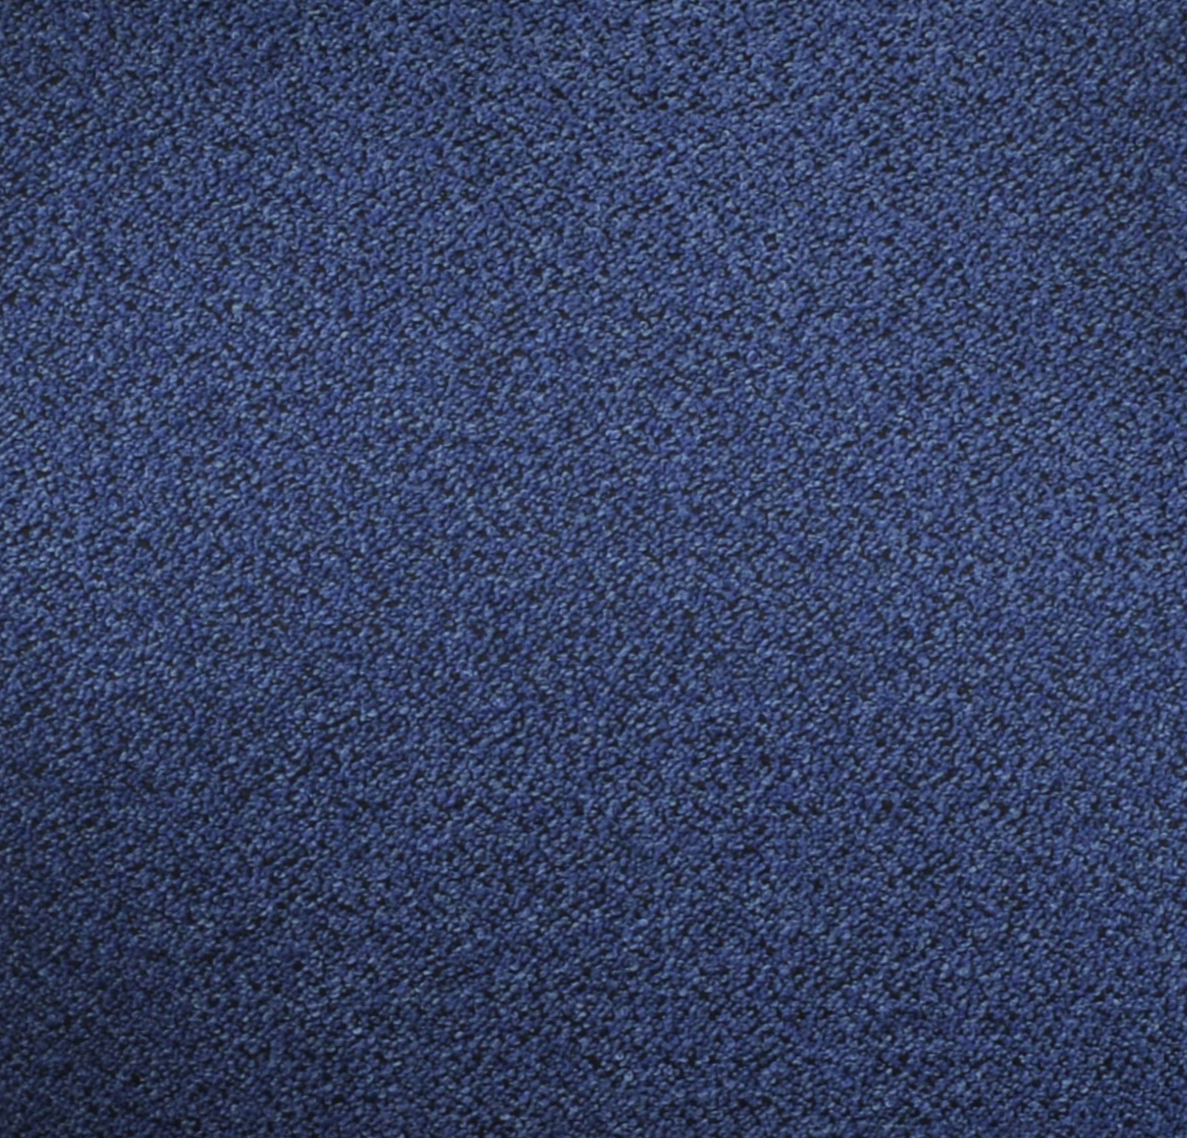 Blue-Black Juno04 Boucle Fabric